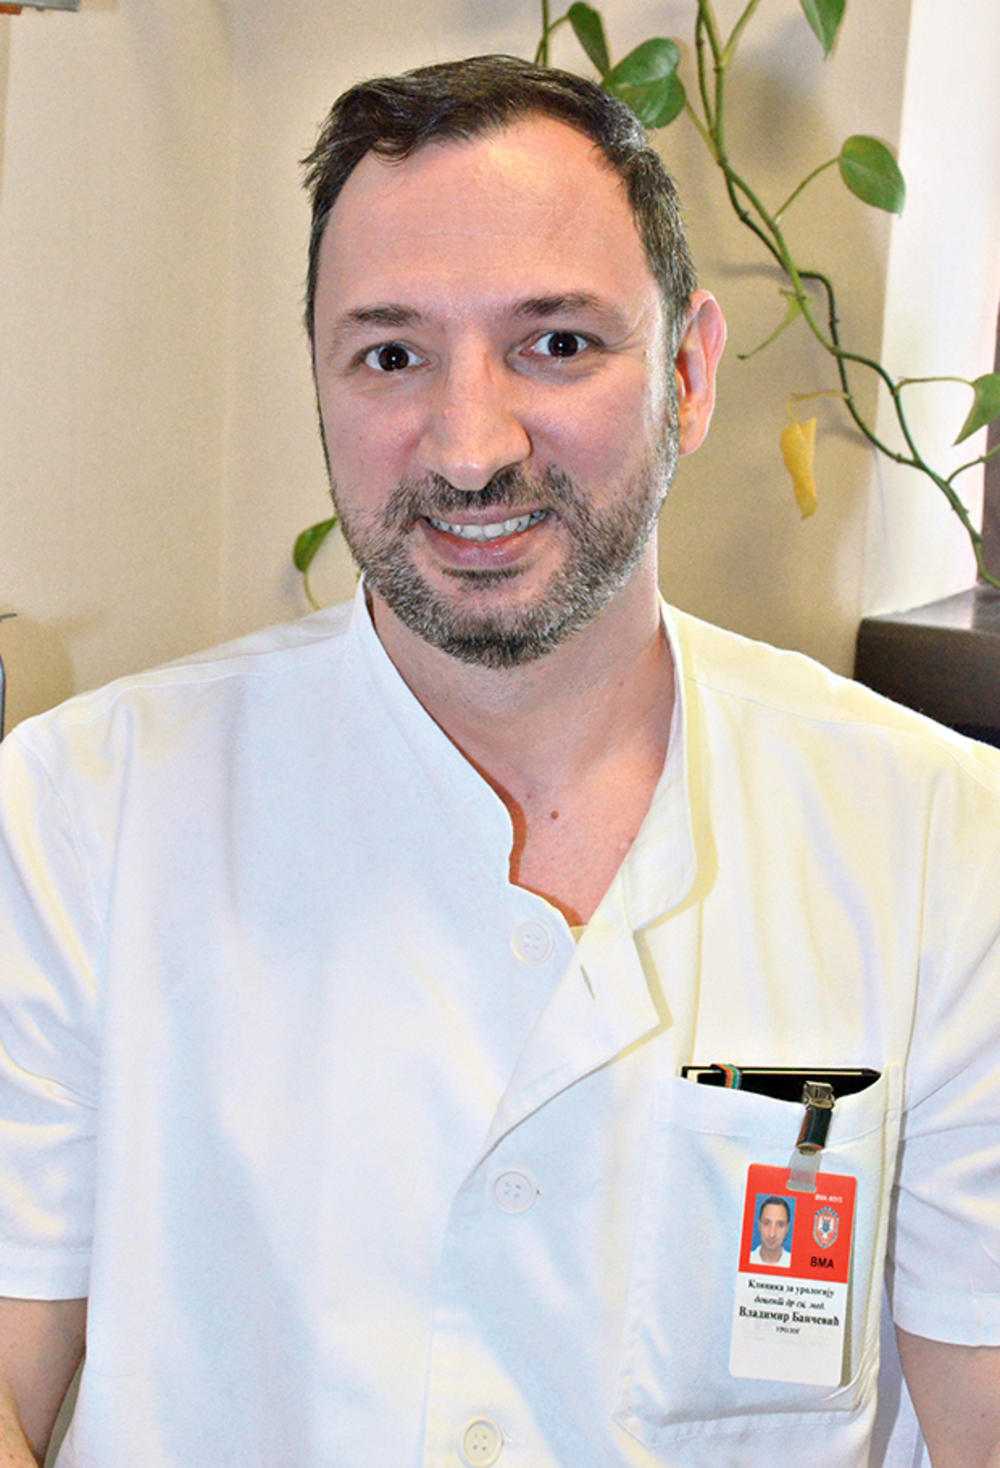 Urolog Prof. dr. Vladimir Bancevic